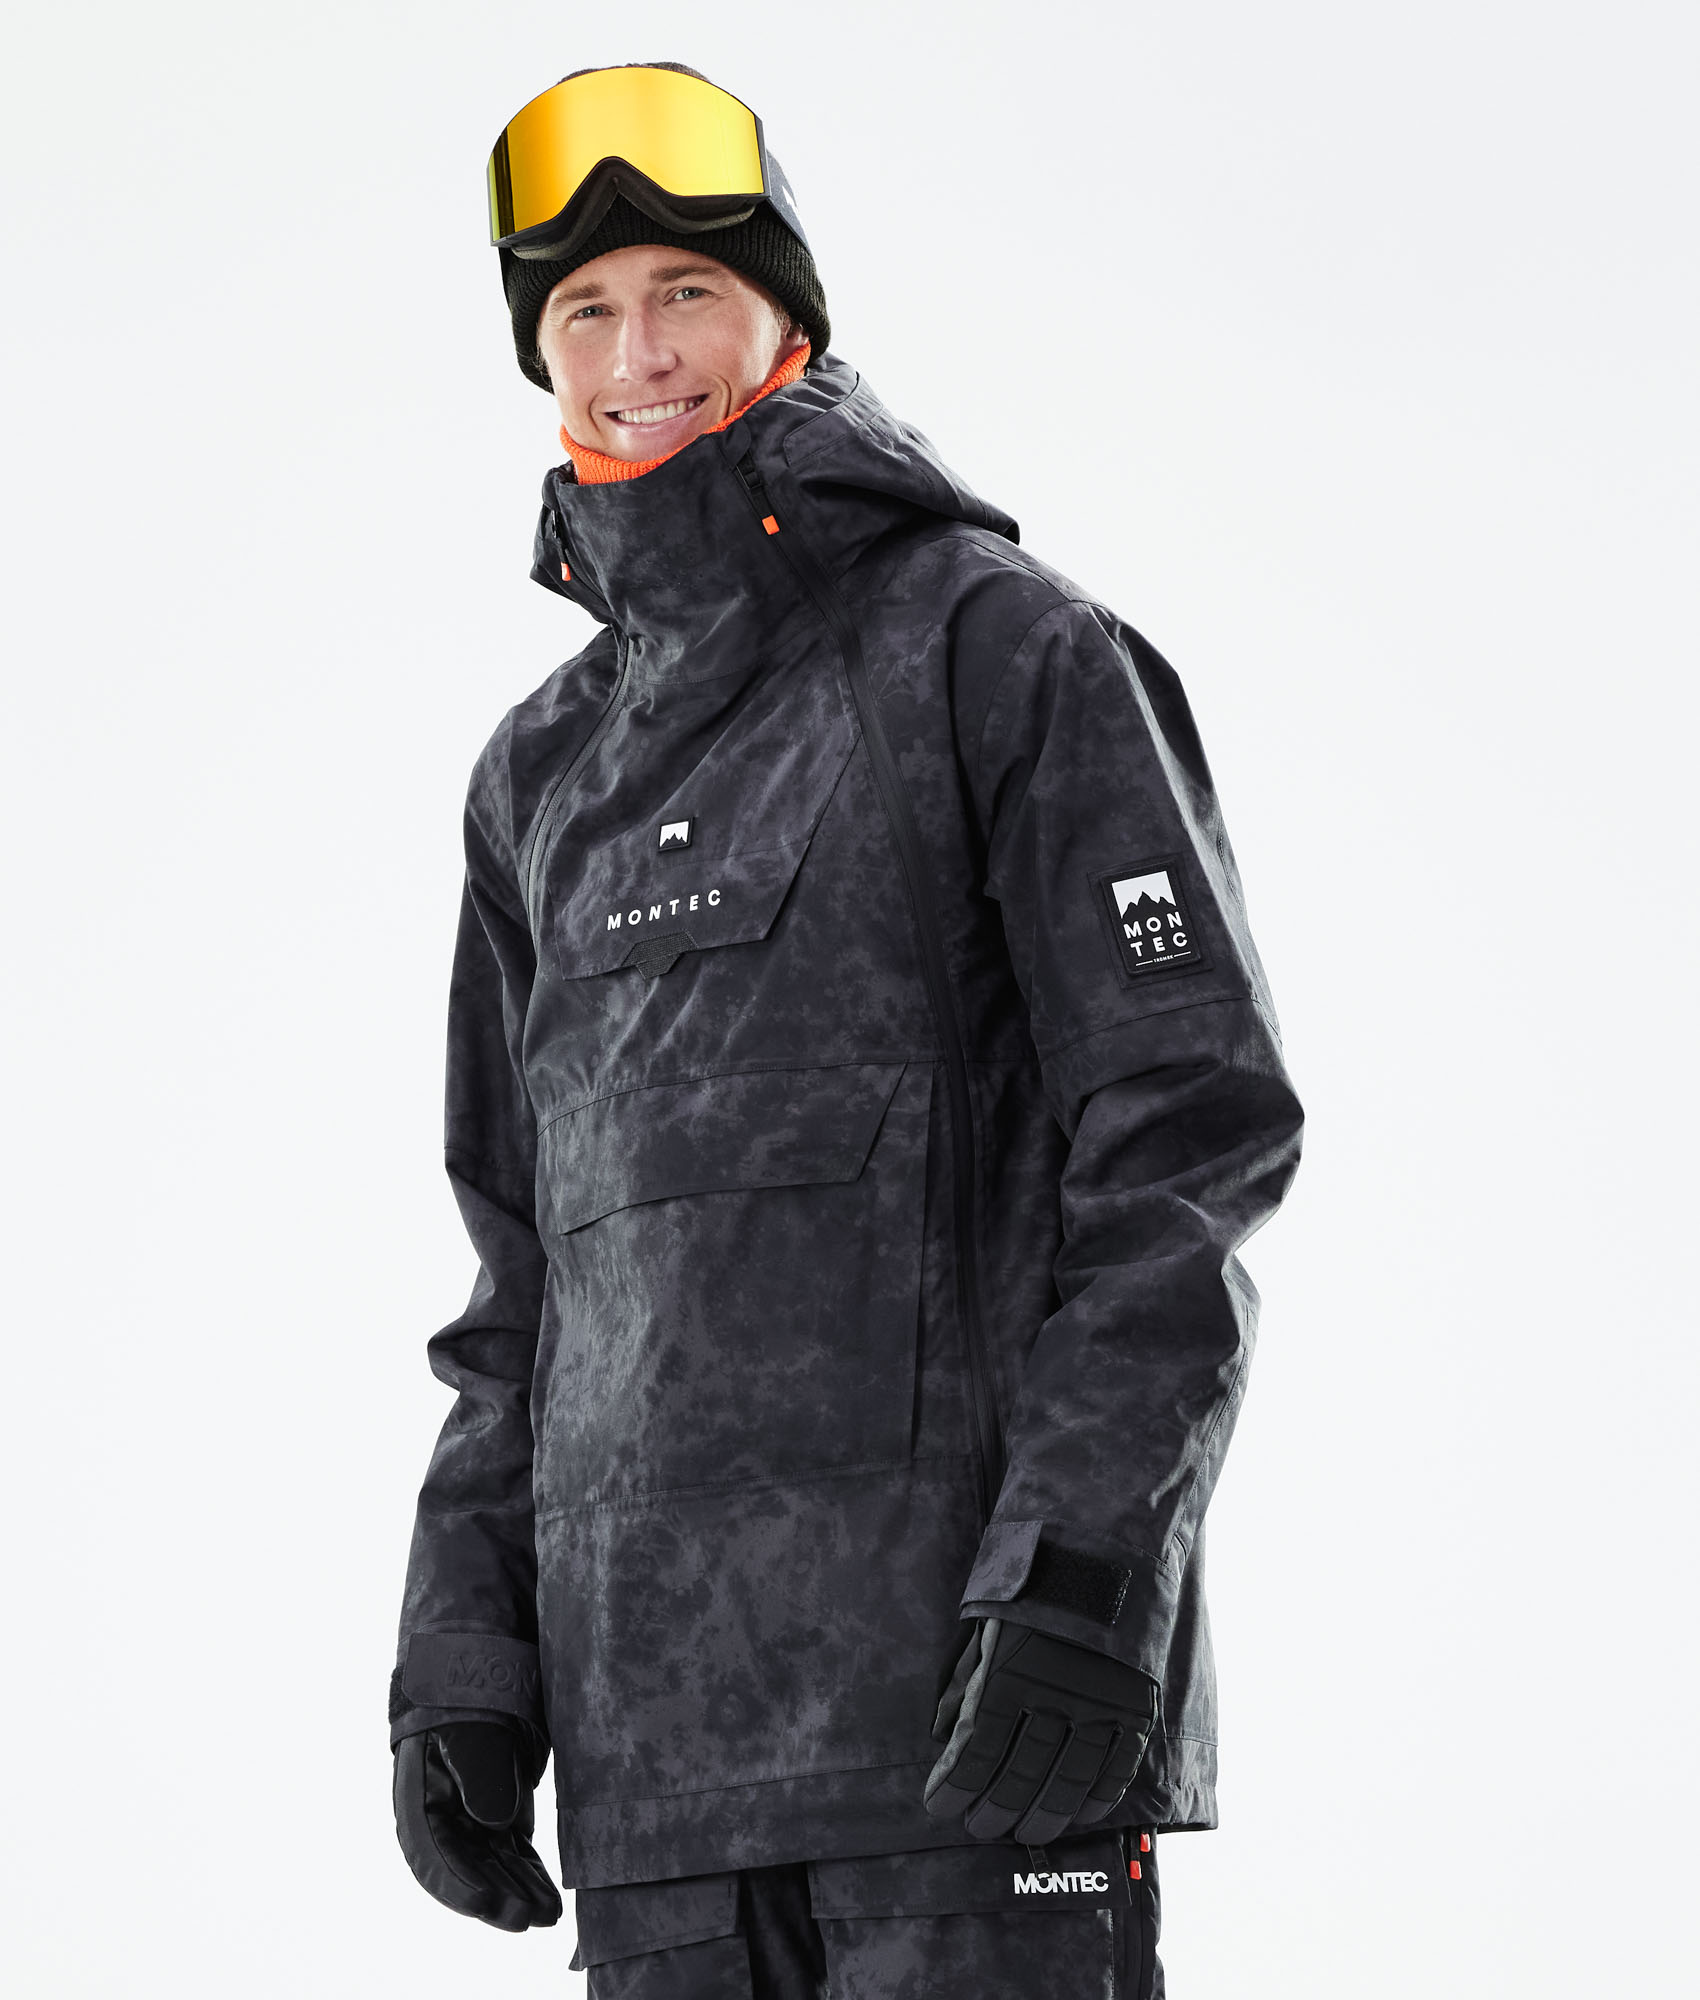 Ski Jacket - Black tech fabric down jacket